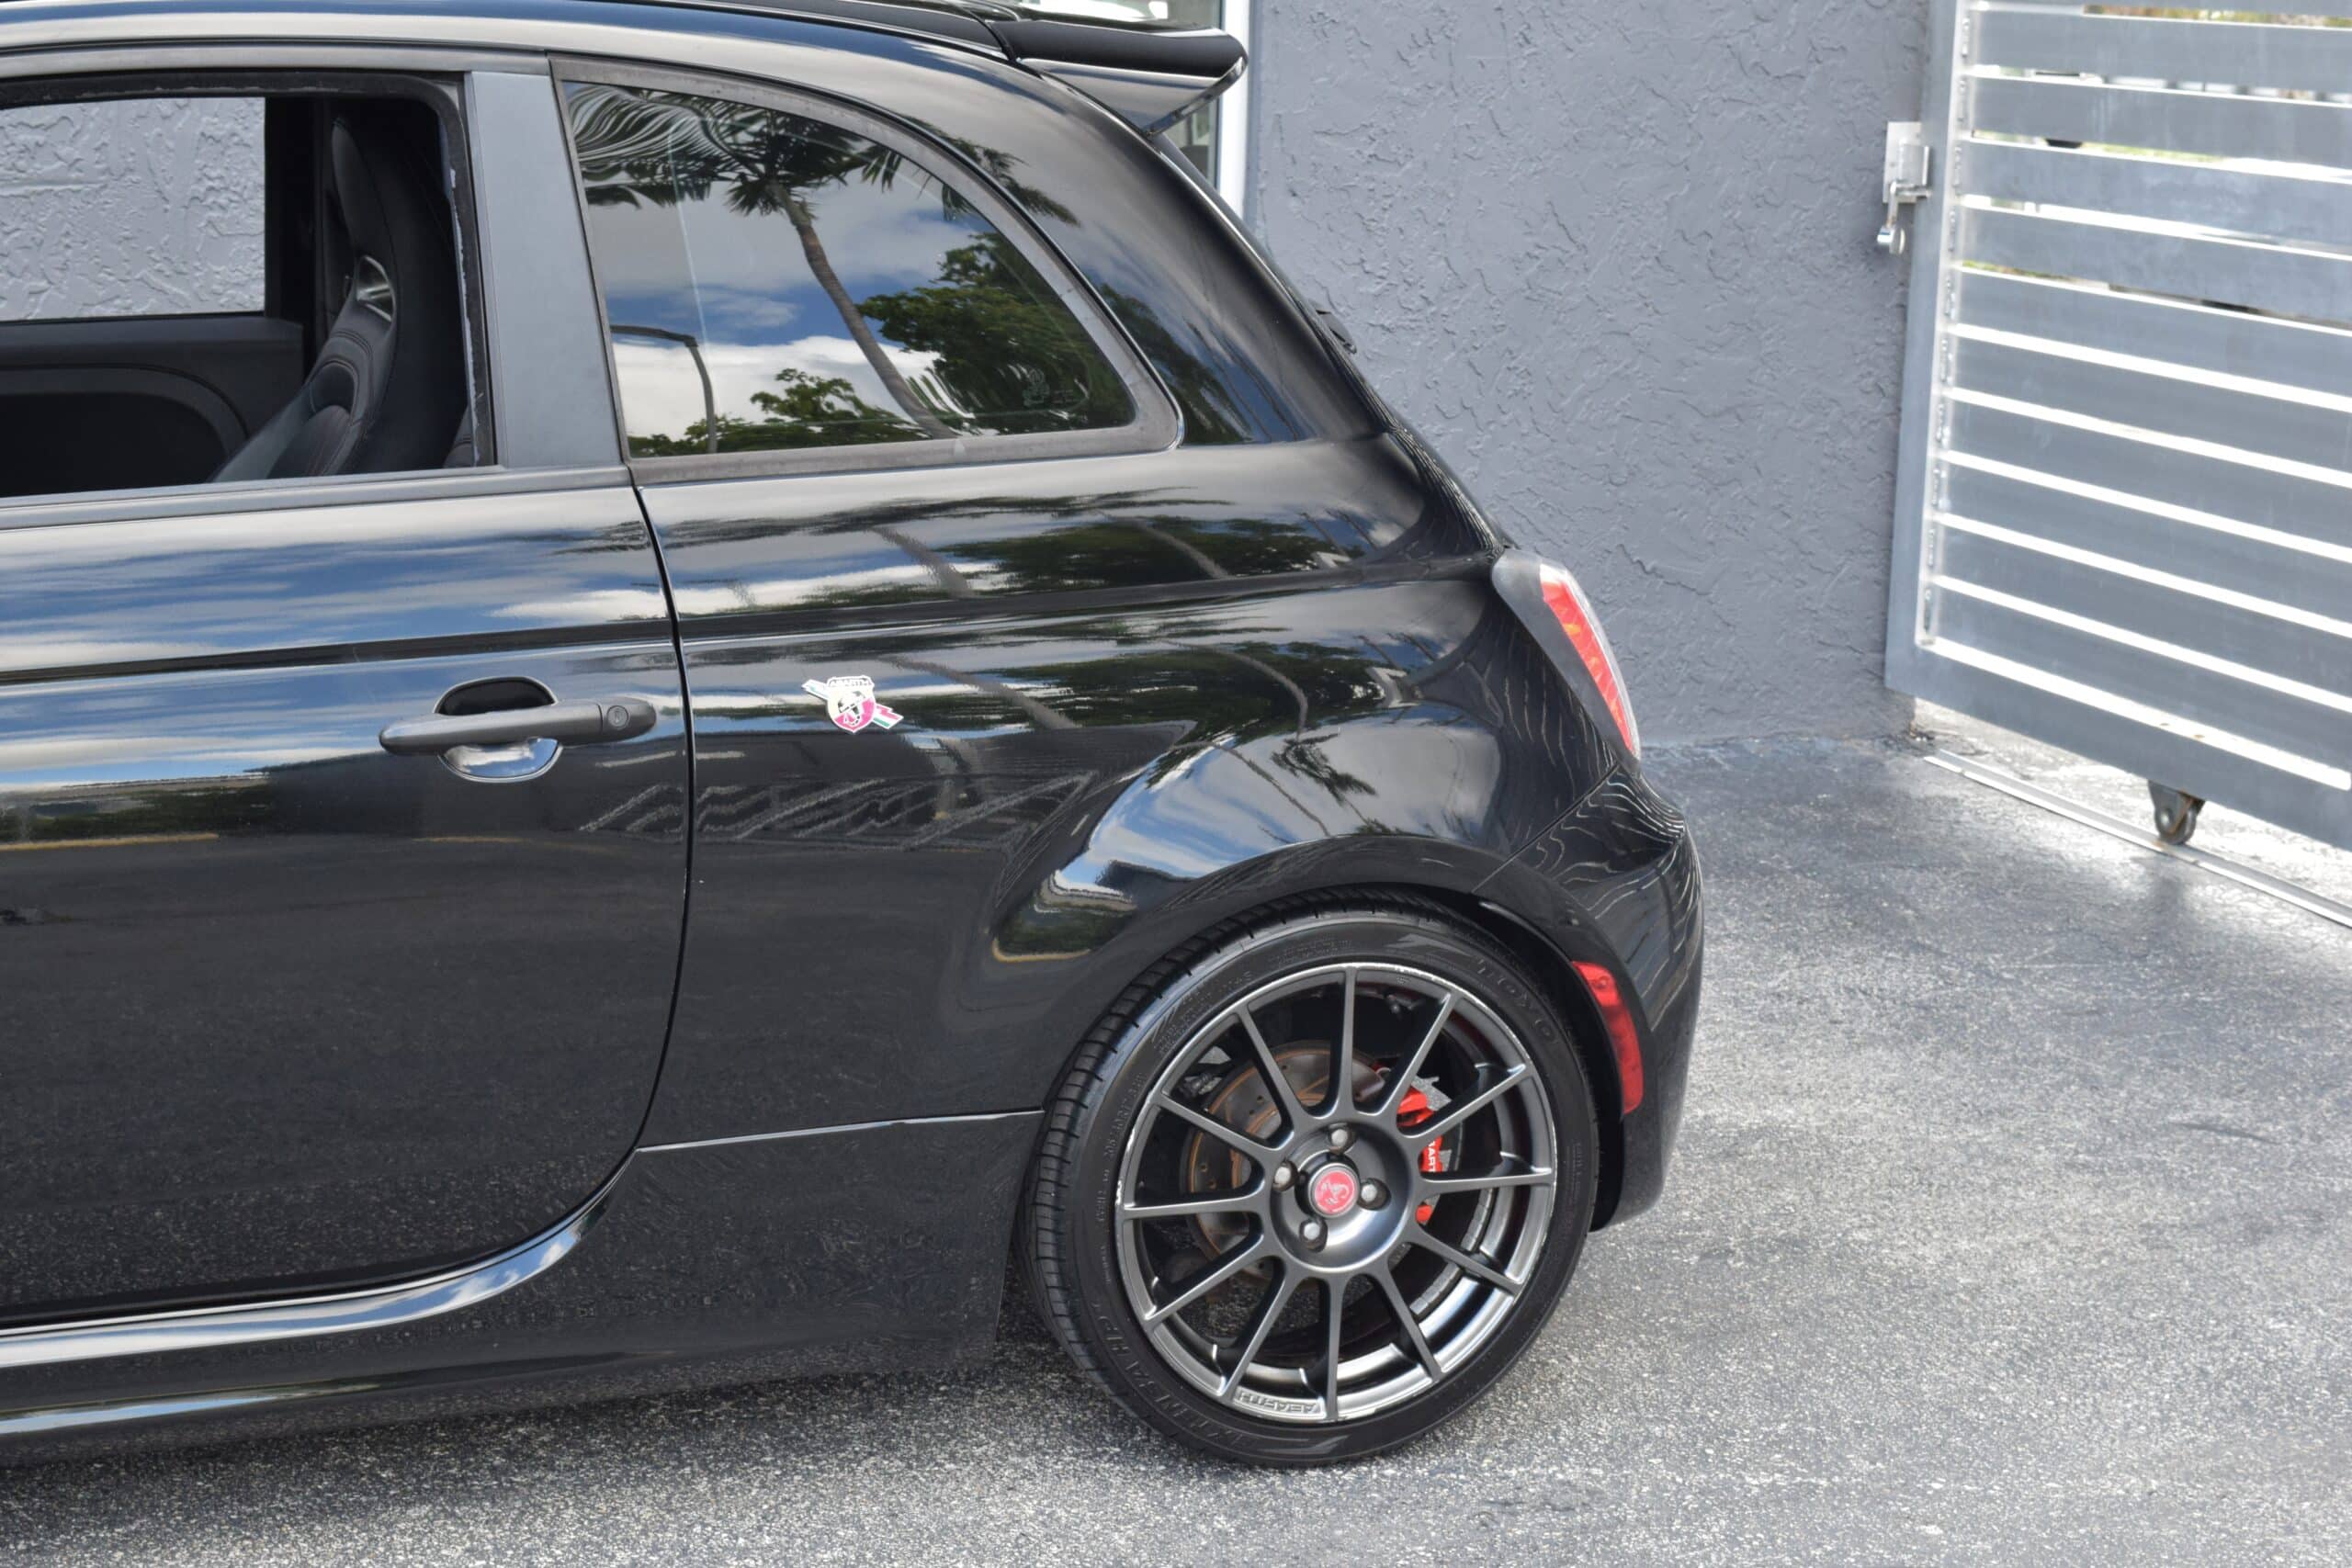 2013 Fiat 500 C Abarth Black on Black – Well Maintained – TURBO – Clean Carfax -Original Window Sticker